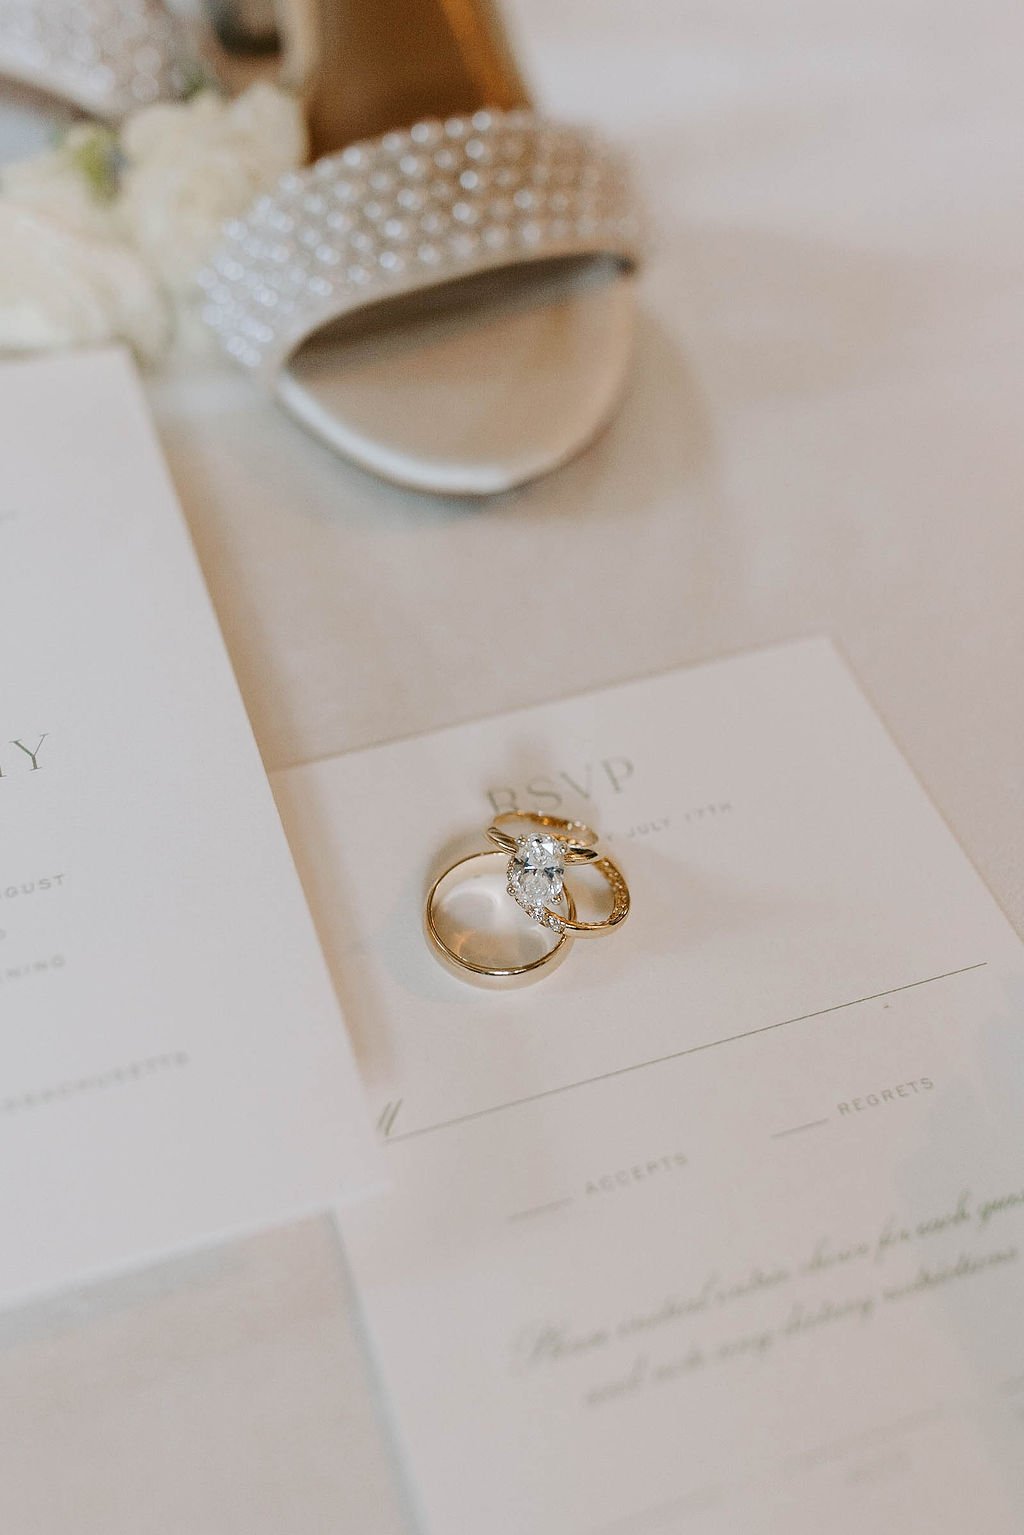 Wedding details of wedding flaylay, white heel, and wedding ring